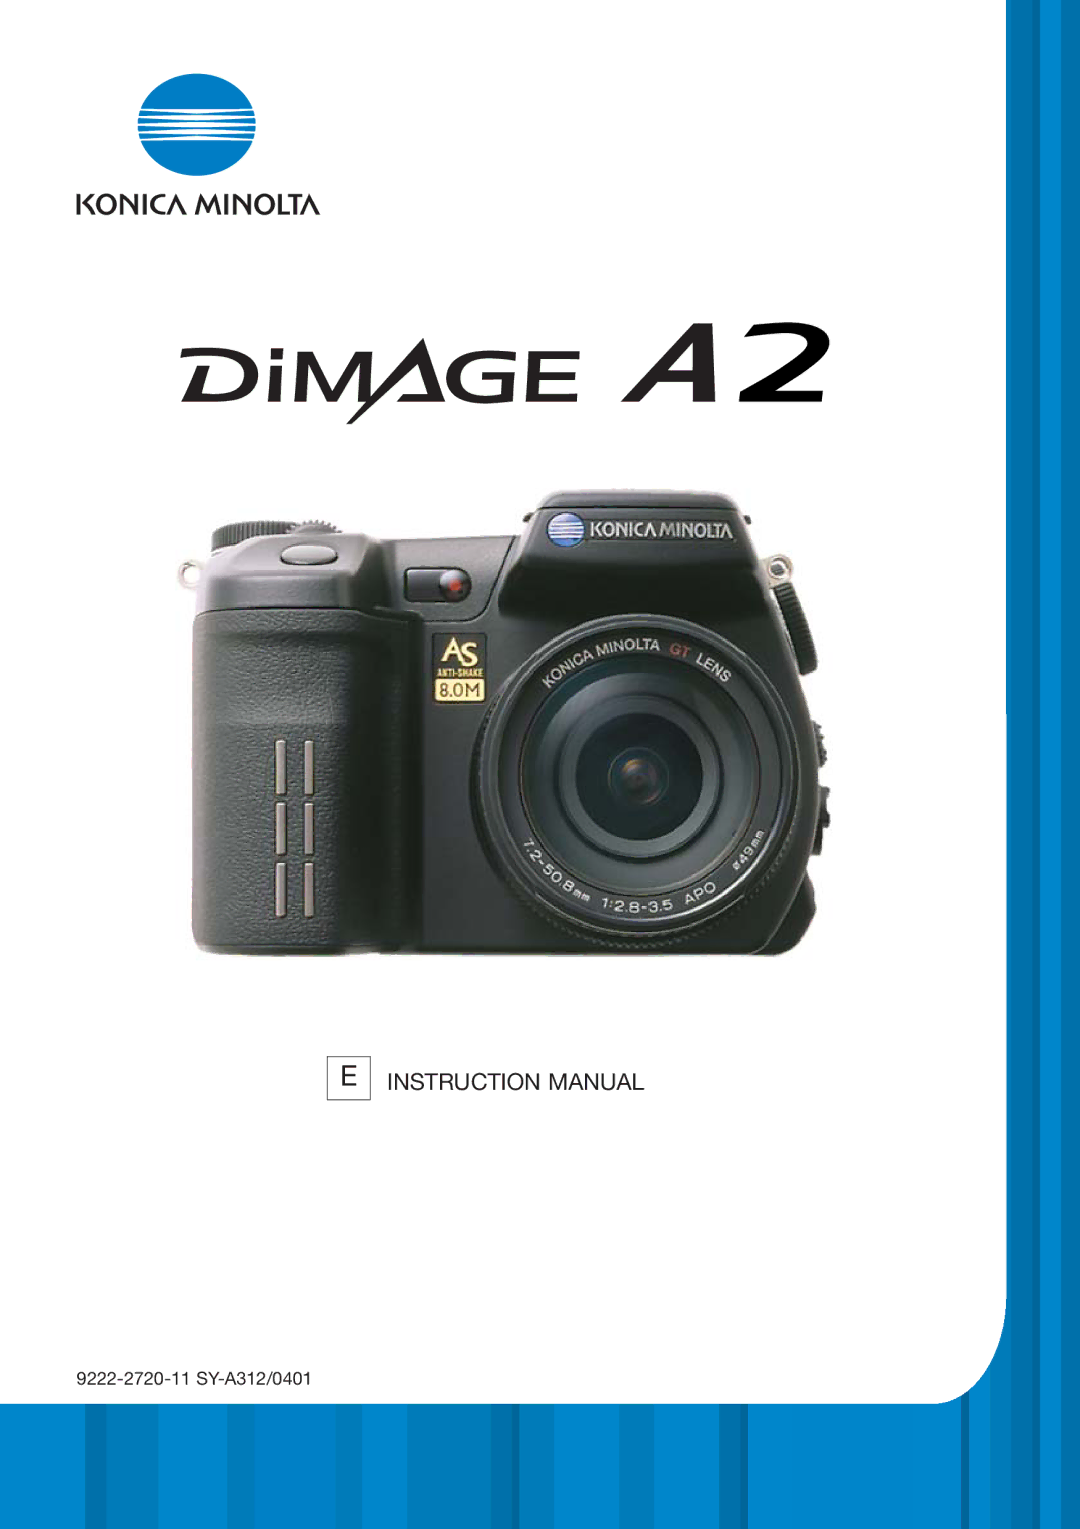 Konica Minolta DiMAGE_A2 instruction manual SY-A312/0401 